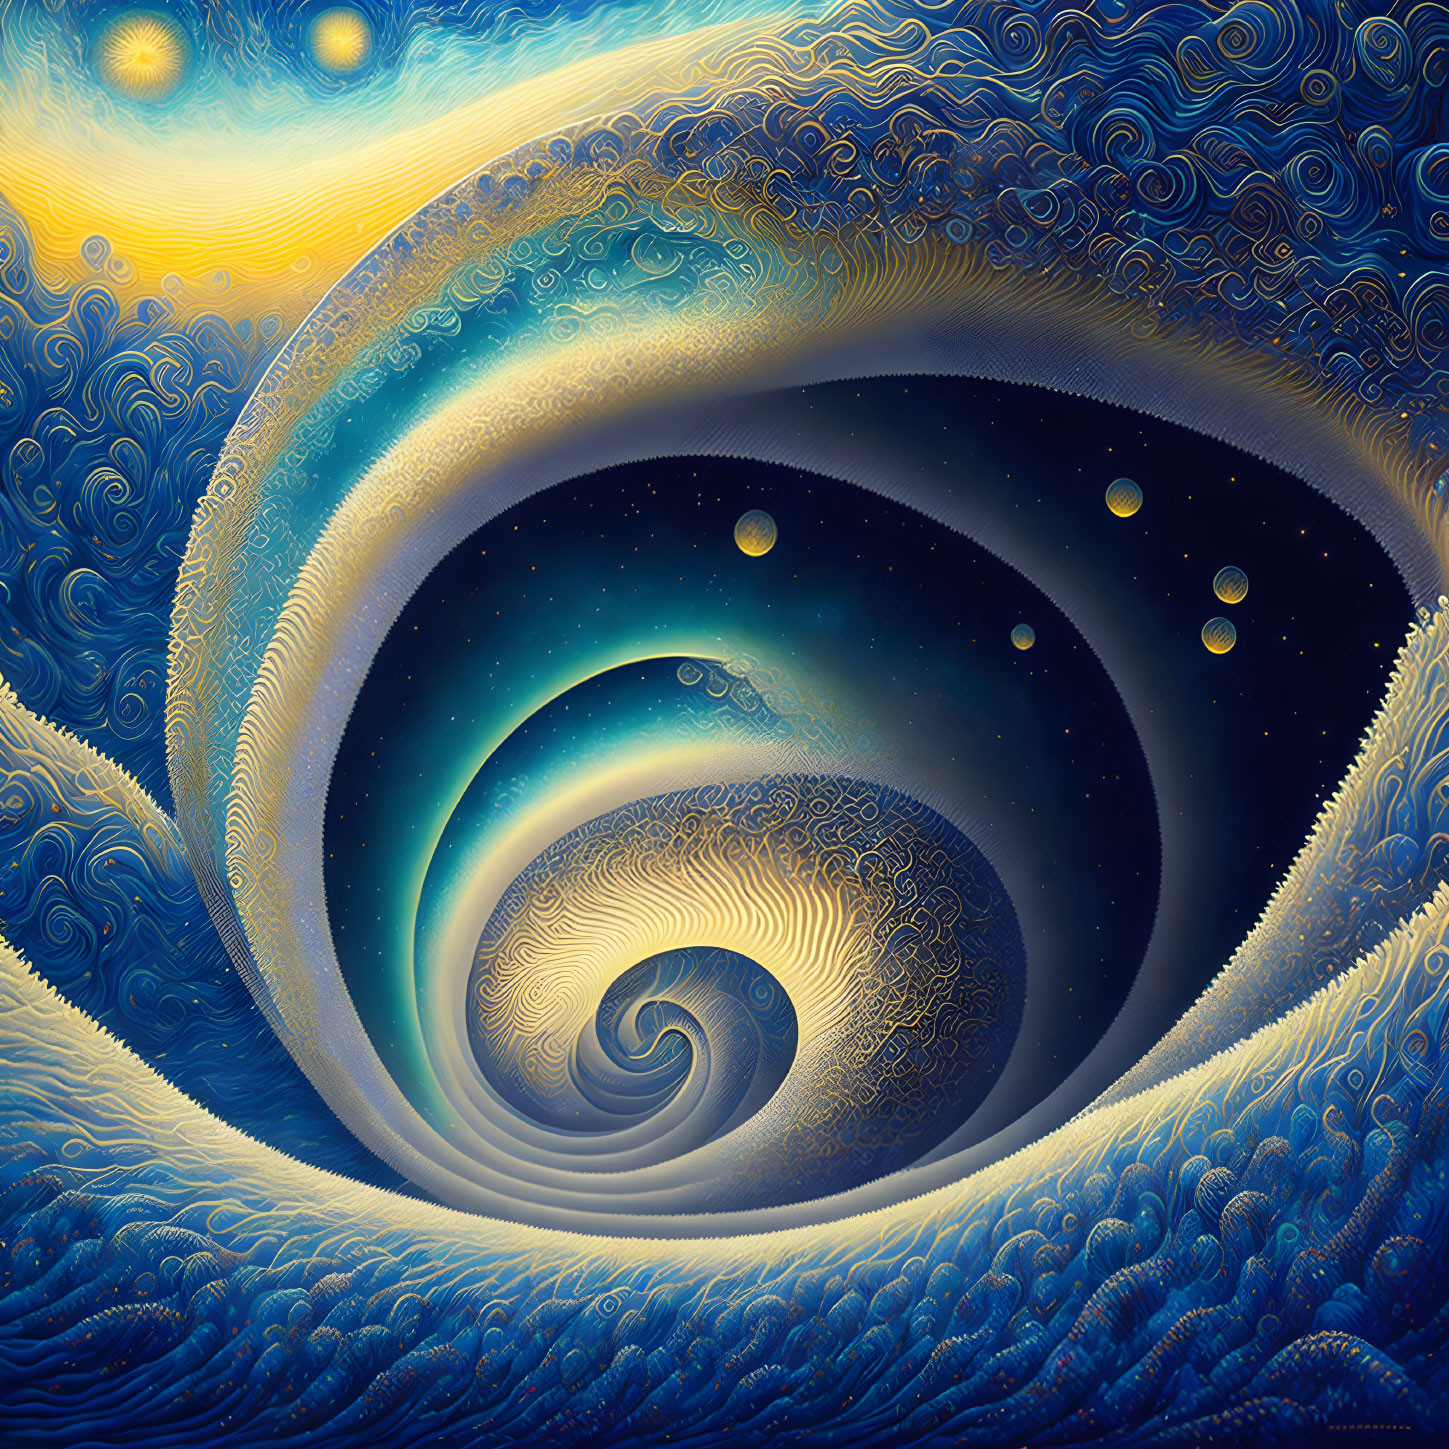 Spiraling cosmic scene with Van Gogh-inspired swirl pattern